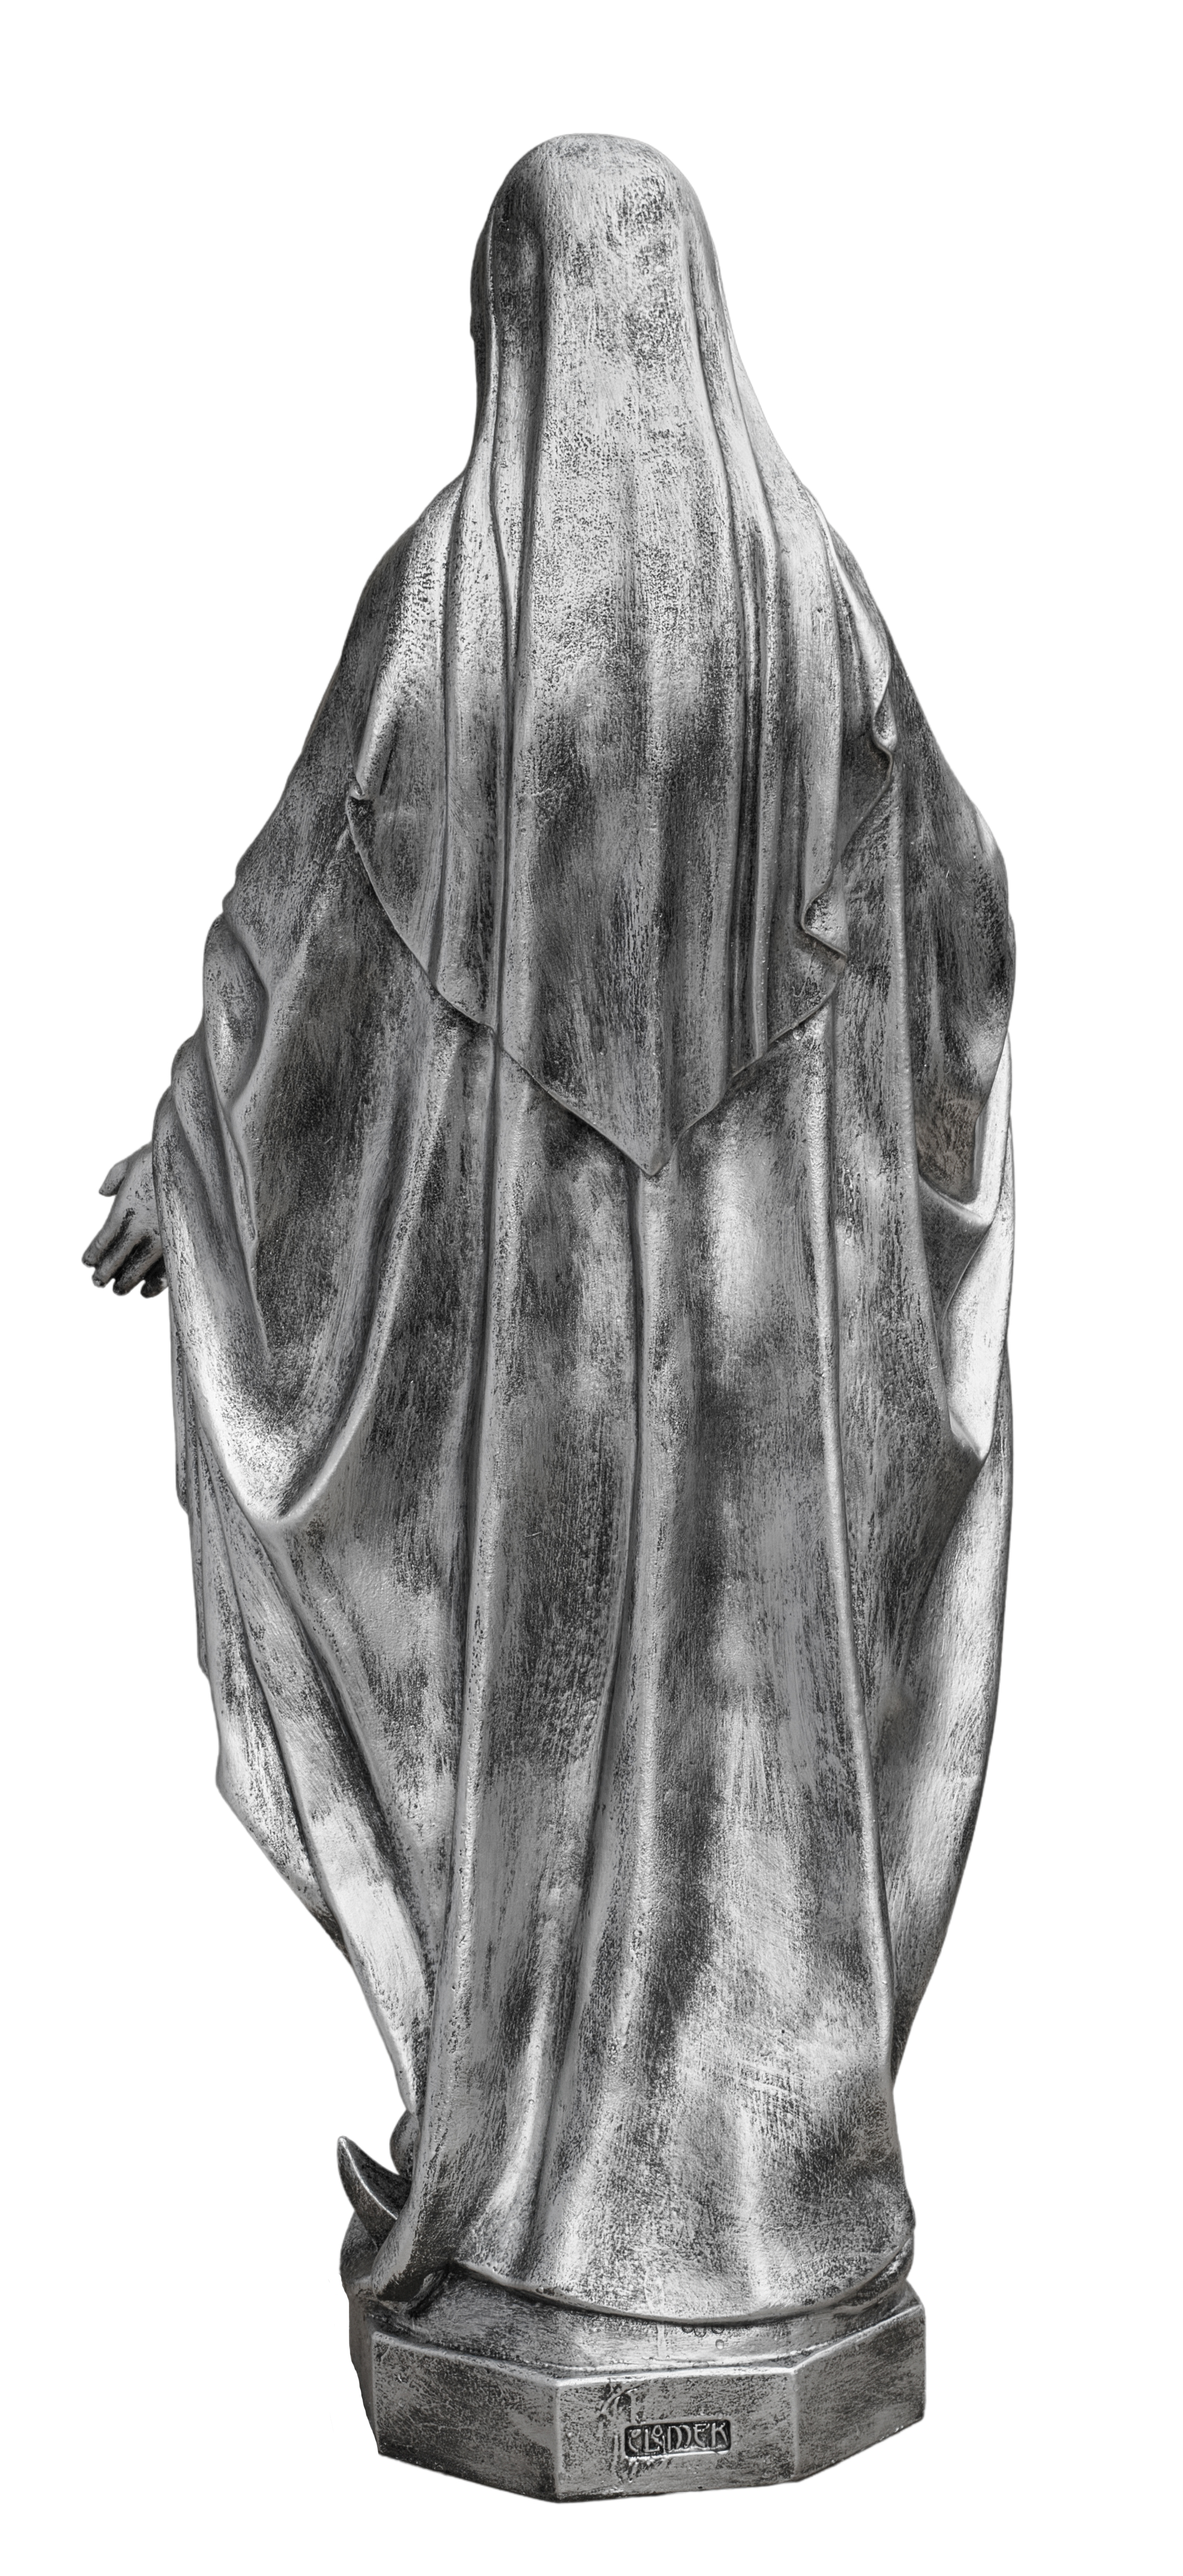 Matka Boża Niepokalana - Figura nagrobna - 105 cm - R35